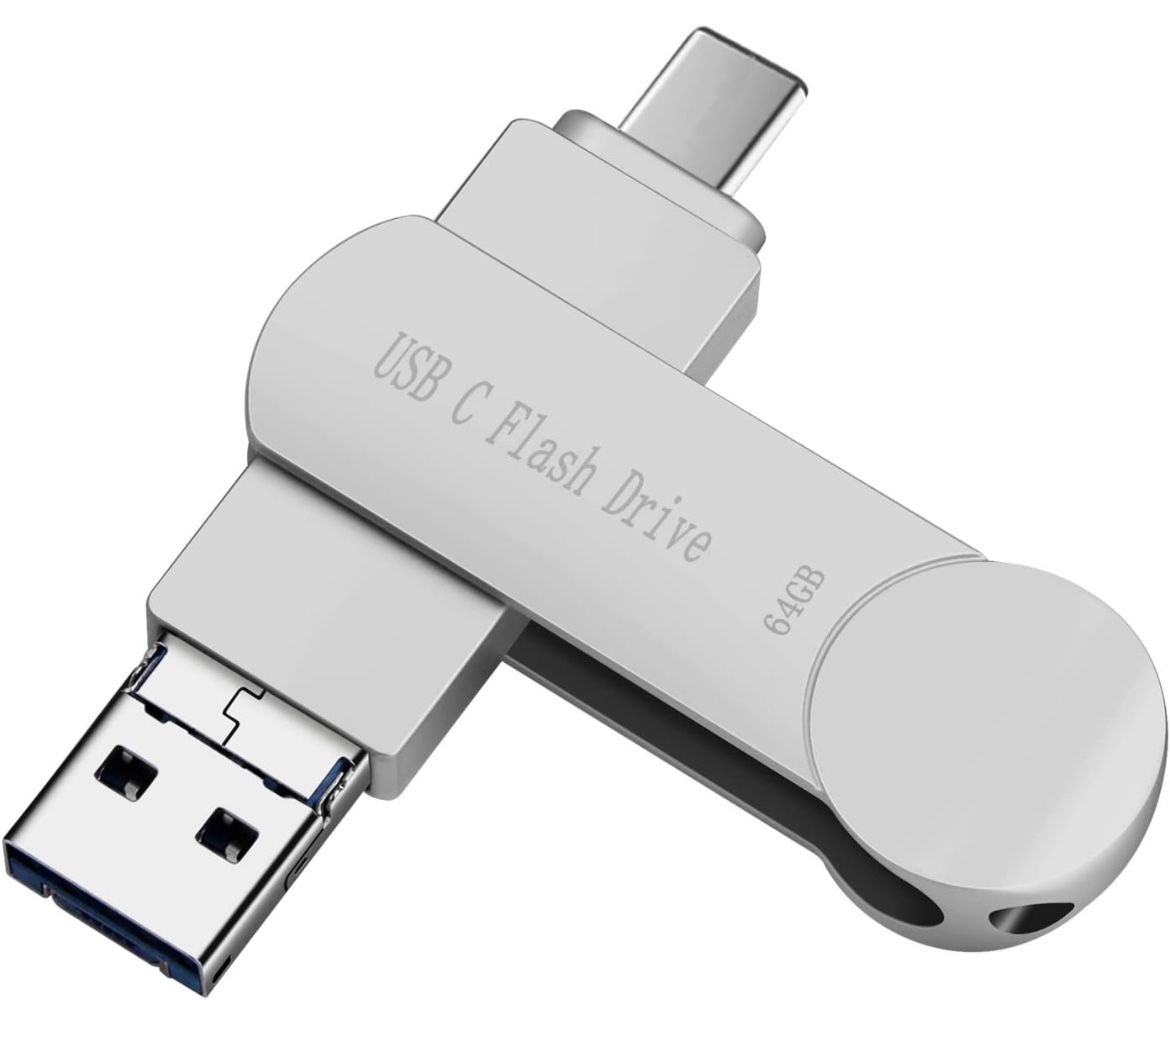 64GB USB C Memory Stick,USB3.0 Flash Drive for iPad mini,3 in 1 Thumb Drive,USB C Zip Drive with Type-c Port,Mini External Storage Drive for Computer/